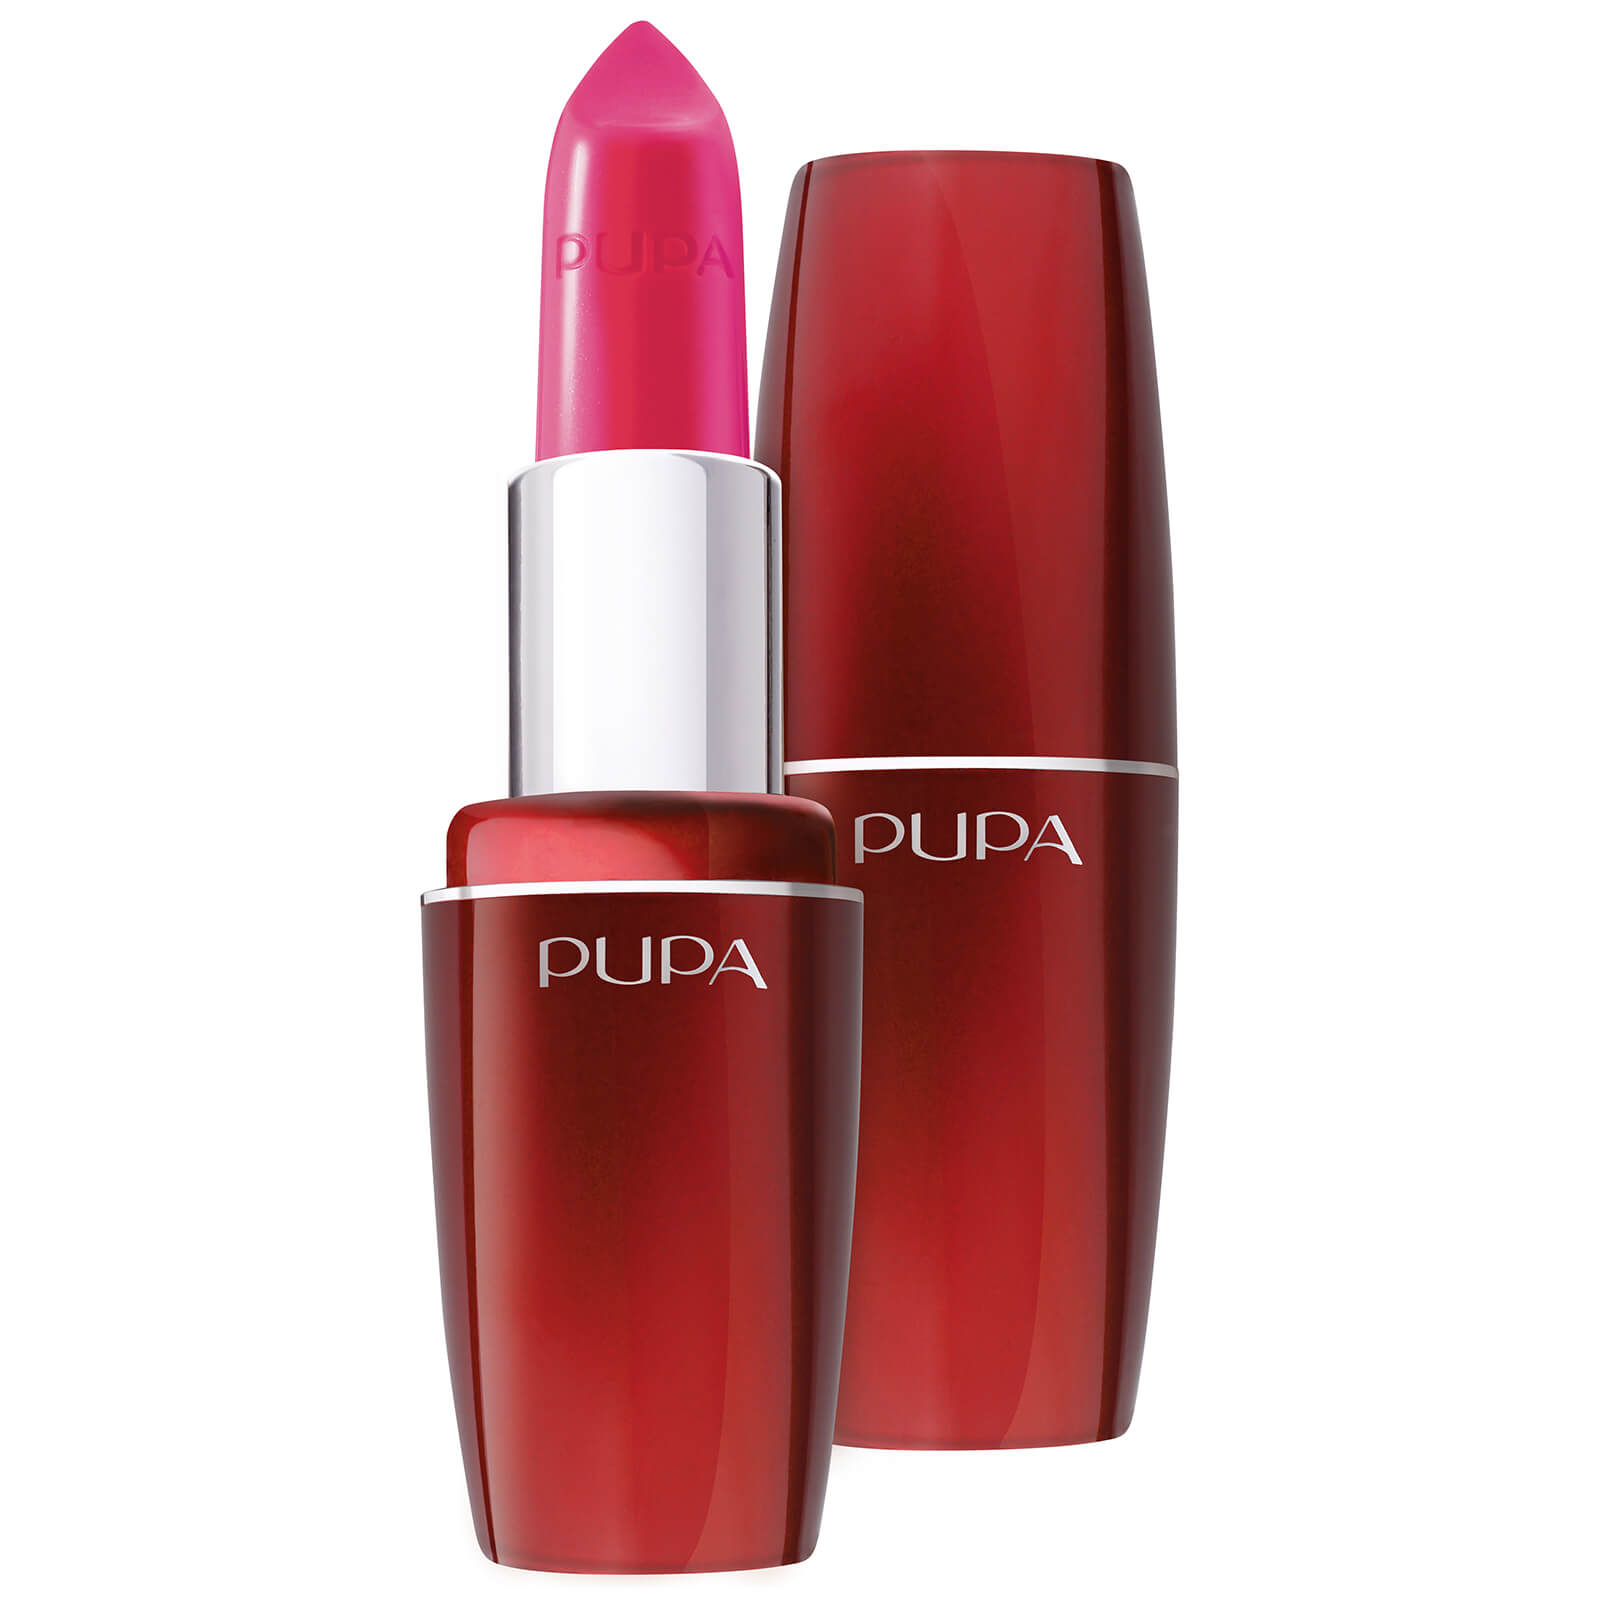 pupa volume enhancing lipstick (various shades) - pop fuchsia donna